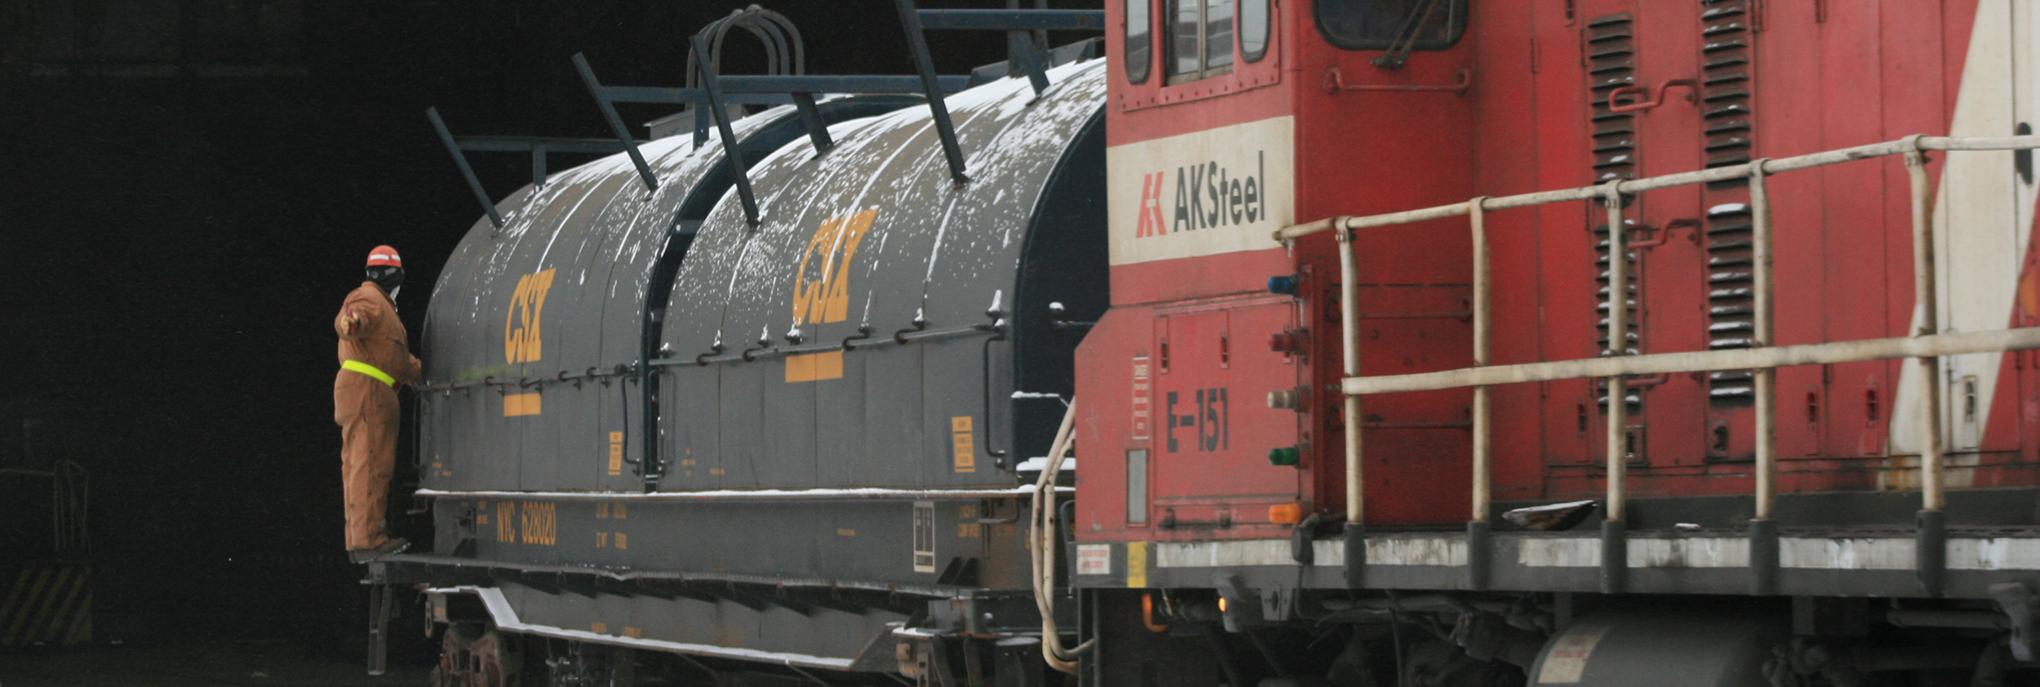 Locomotive Operator and Switchman staffed to work on CSX locomotive